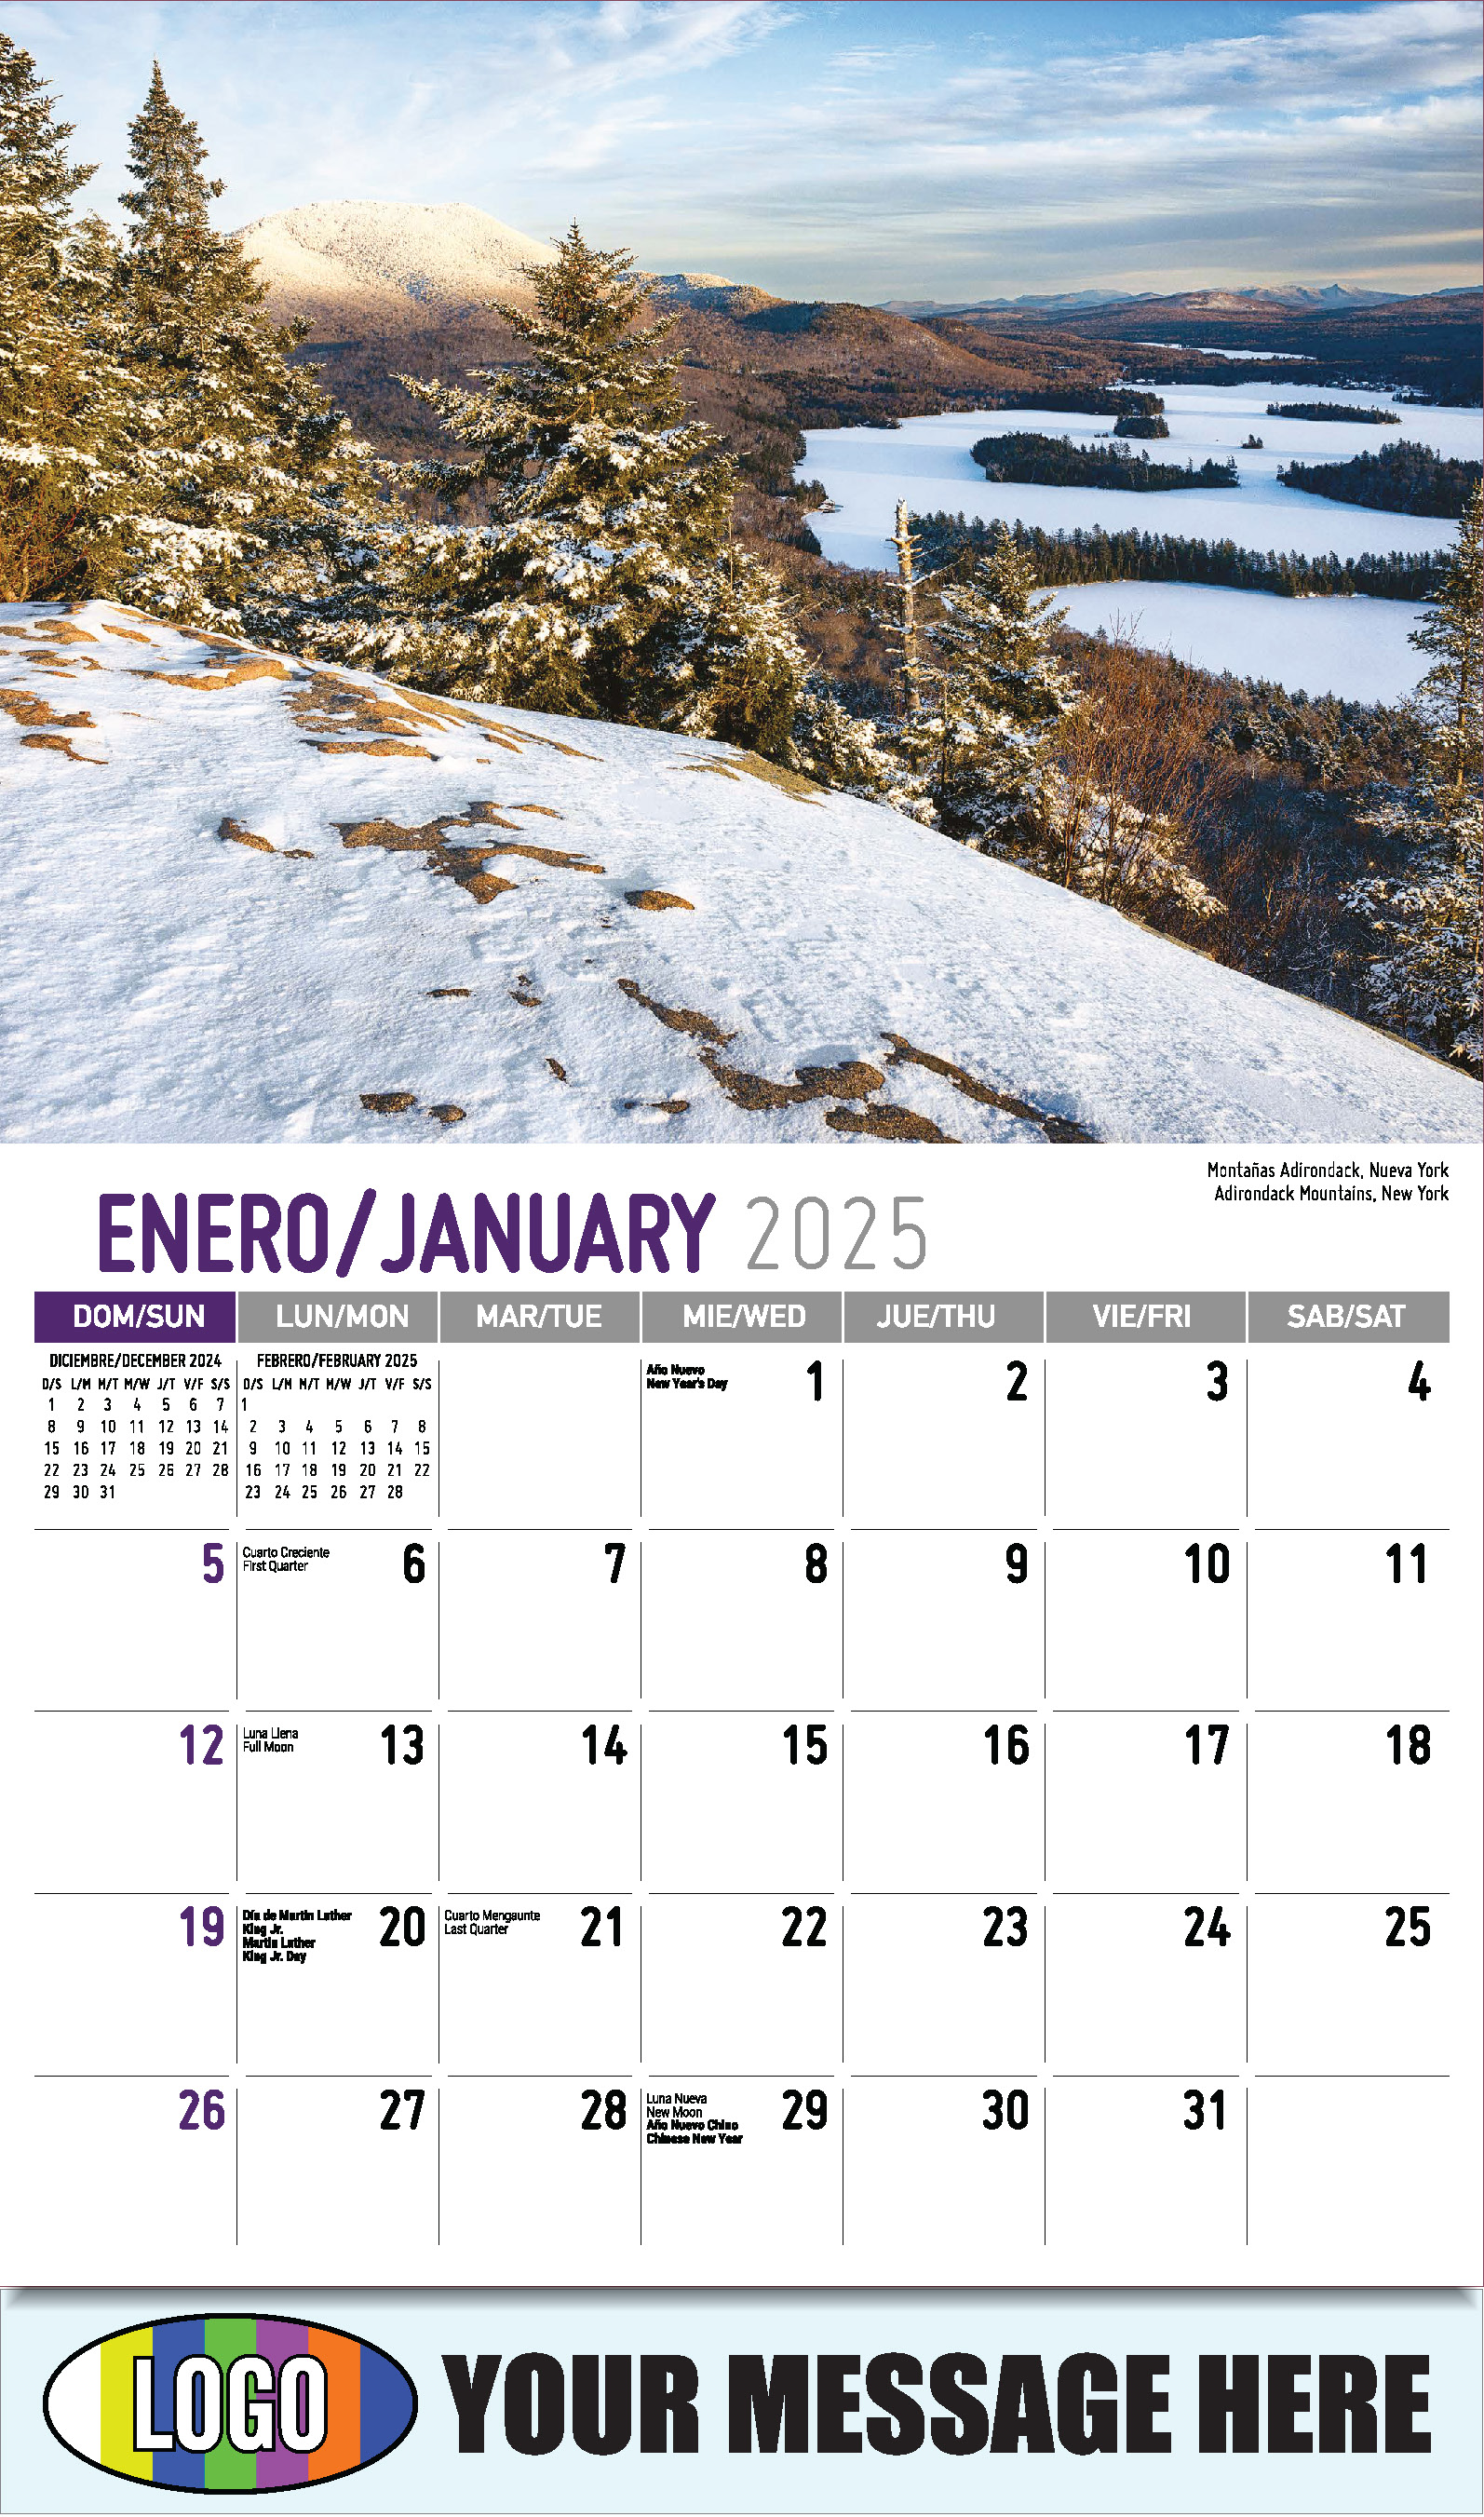 Scenes of America 2025 Bilingual Business Promo Calendar - January